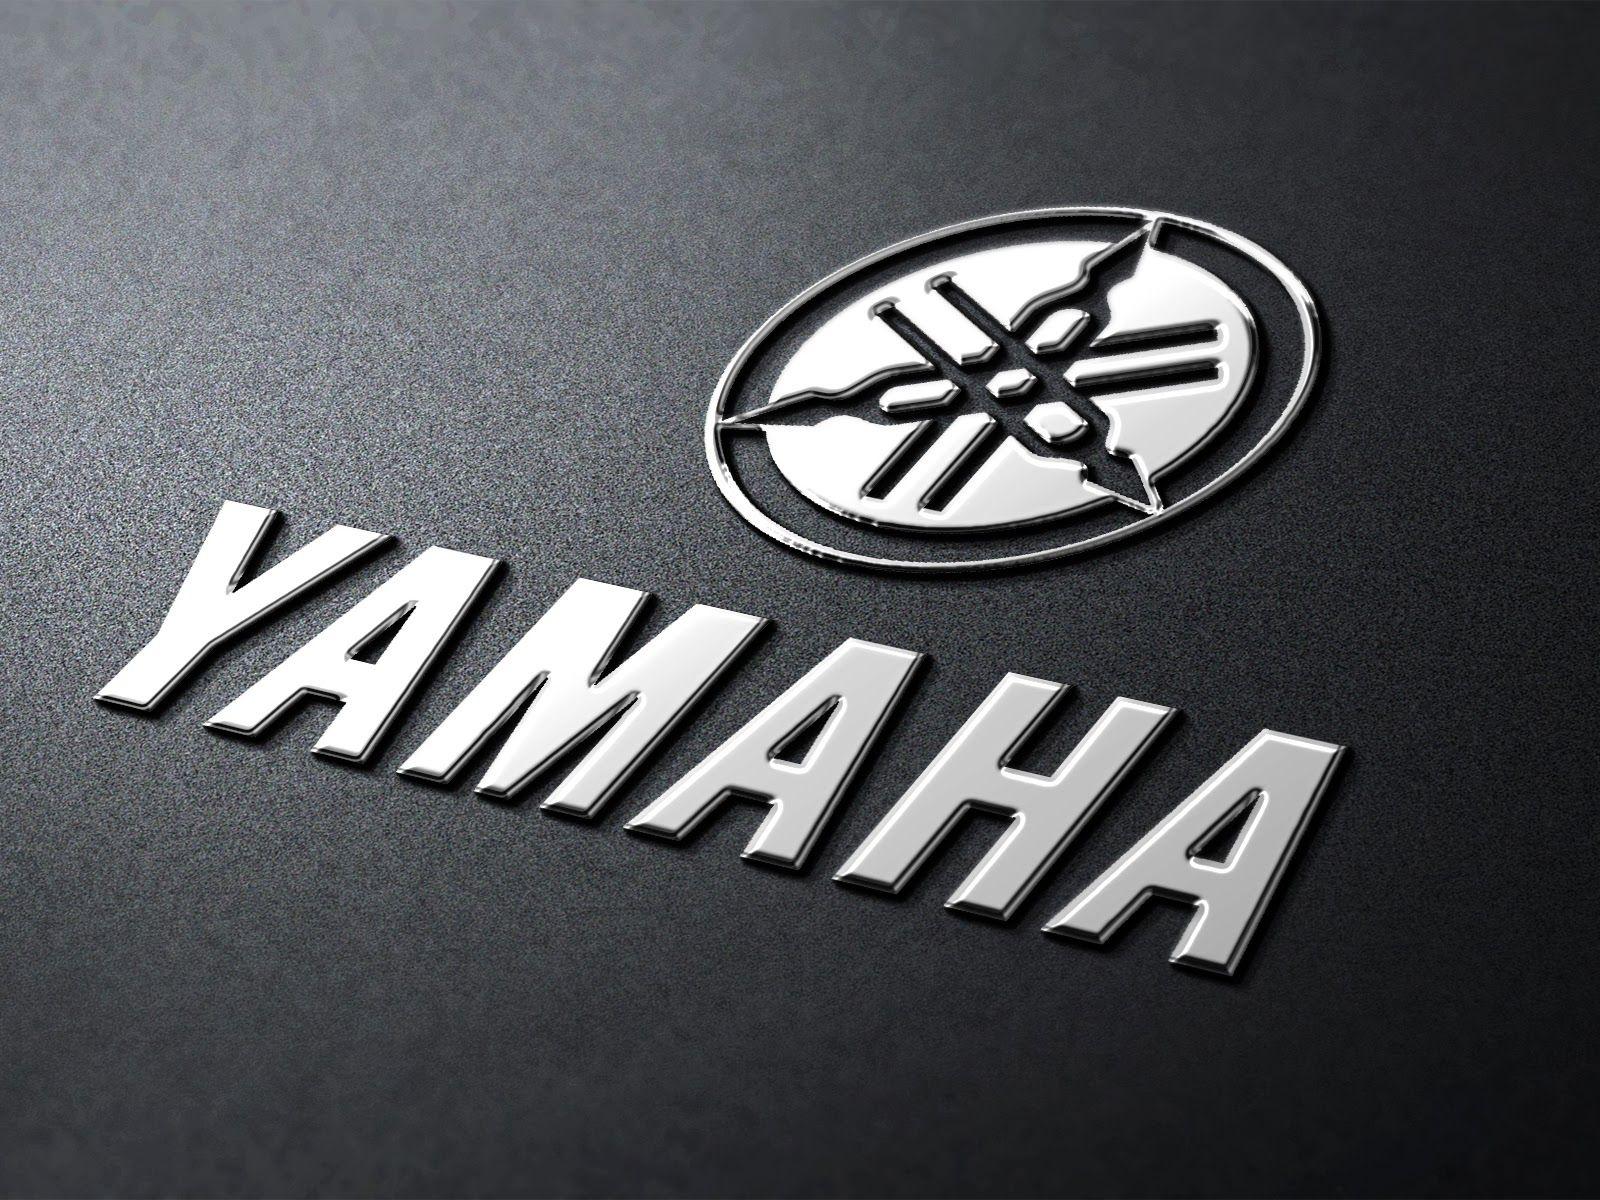 Yamaha Racing Wallpaper Free Yamaha Racing Background